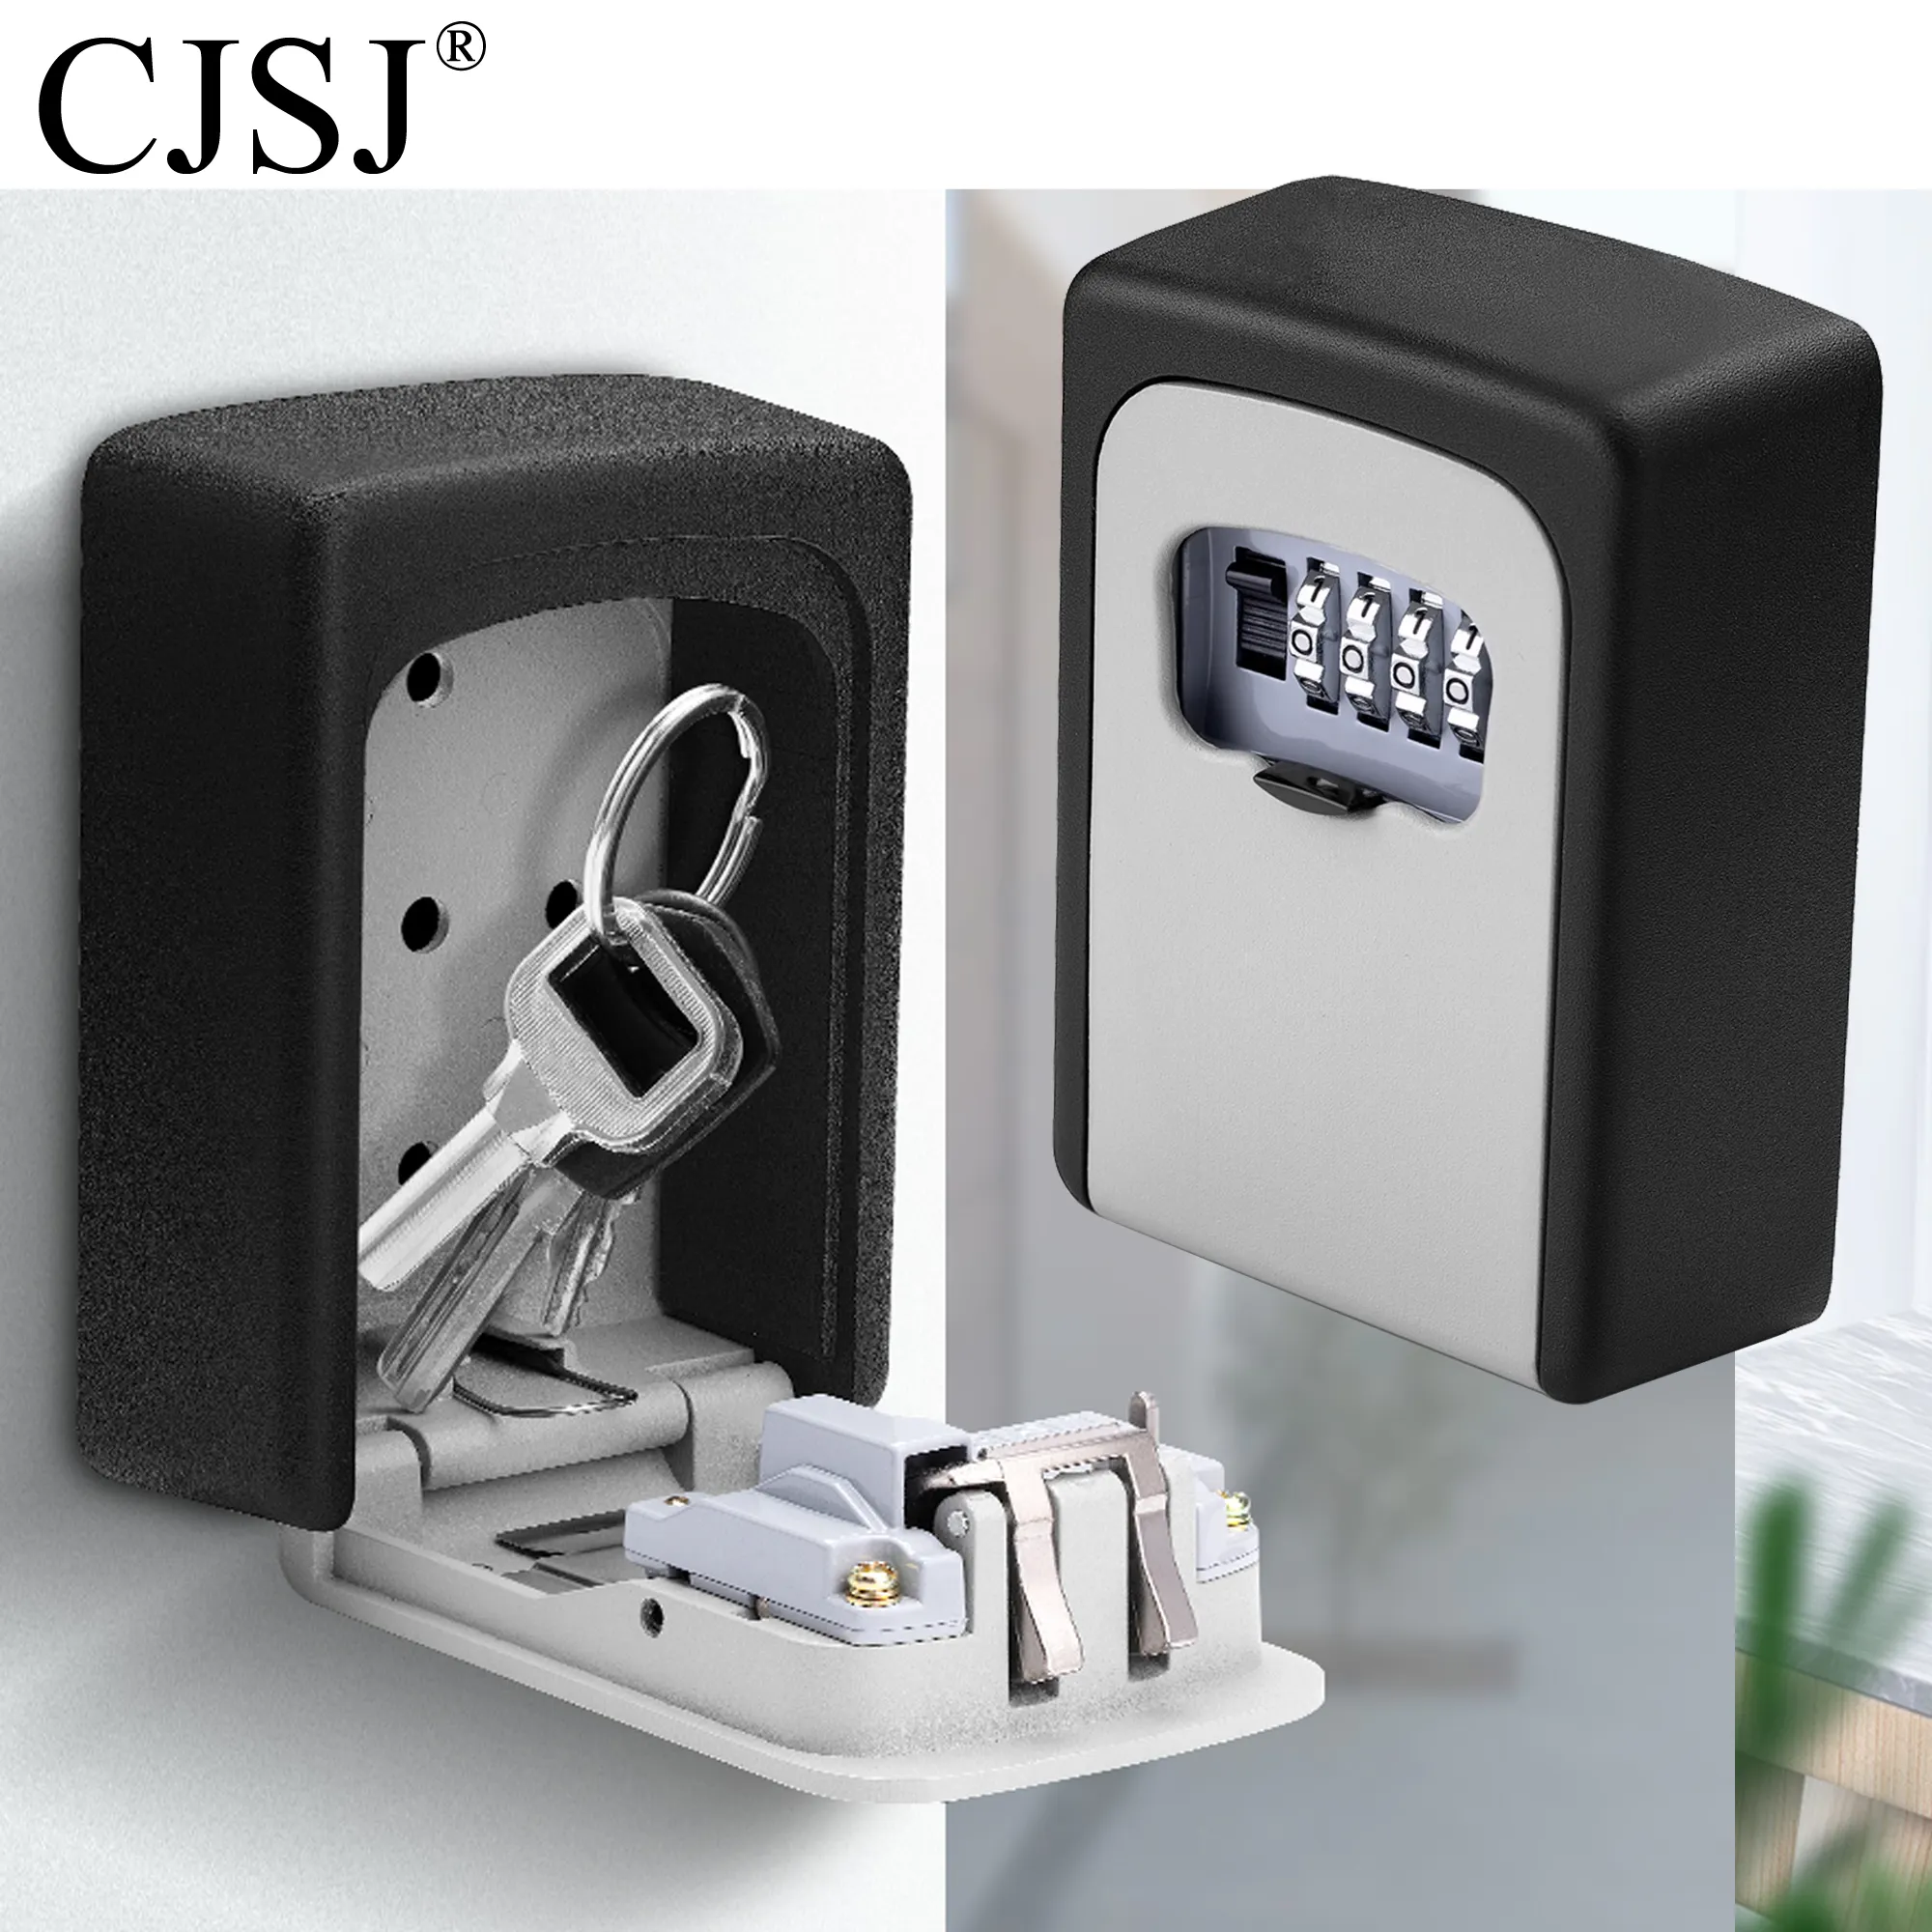 Top security CJSJ CH-851 4 digit combination high quality aluminum alloy safe key storage lock box